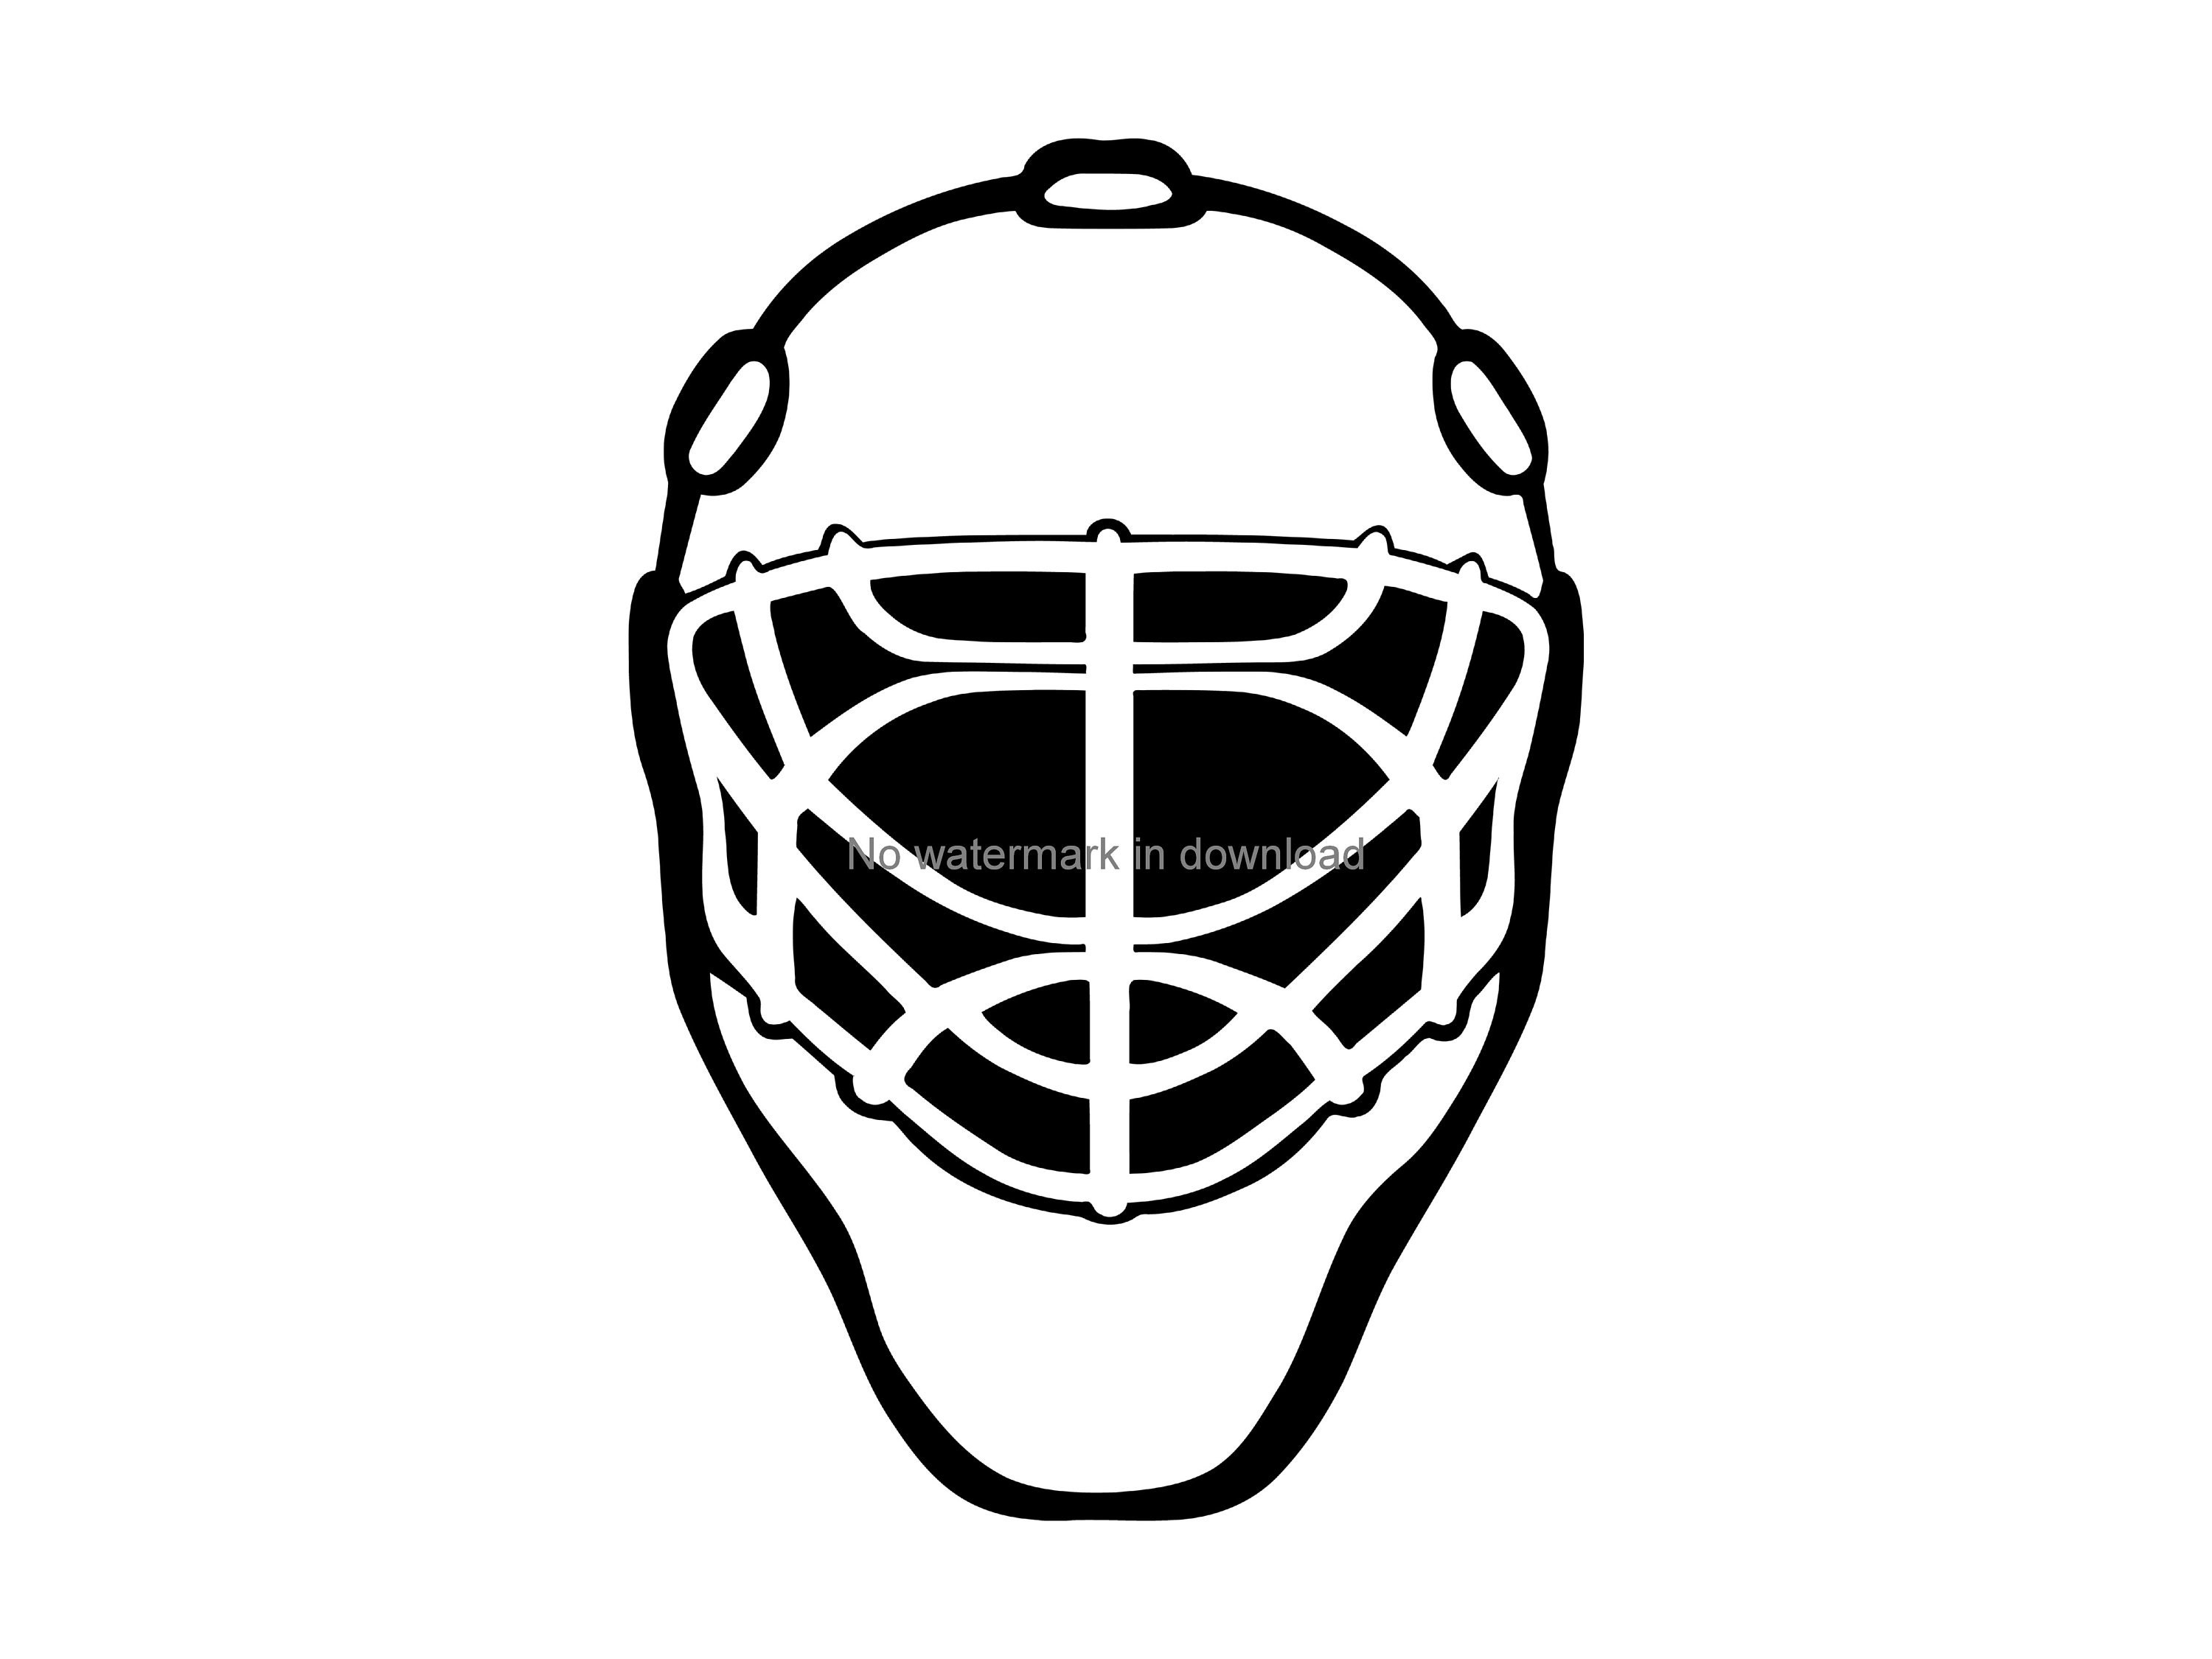 Blank canvas - goalie mask  Illustration or graphics contest